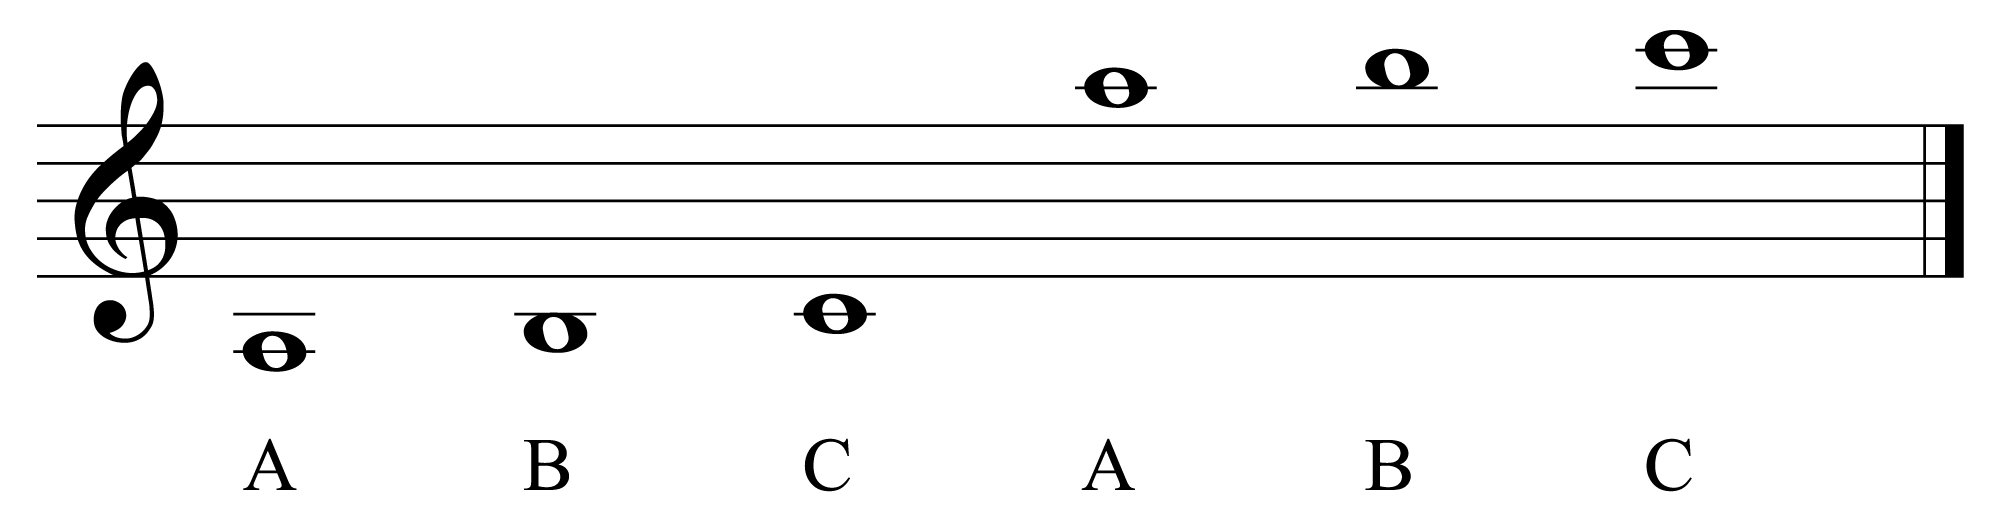 3-1-5-musical-notation-digital-sound-music